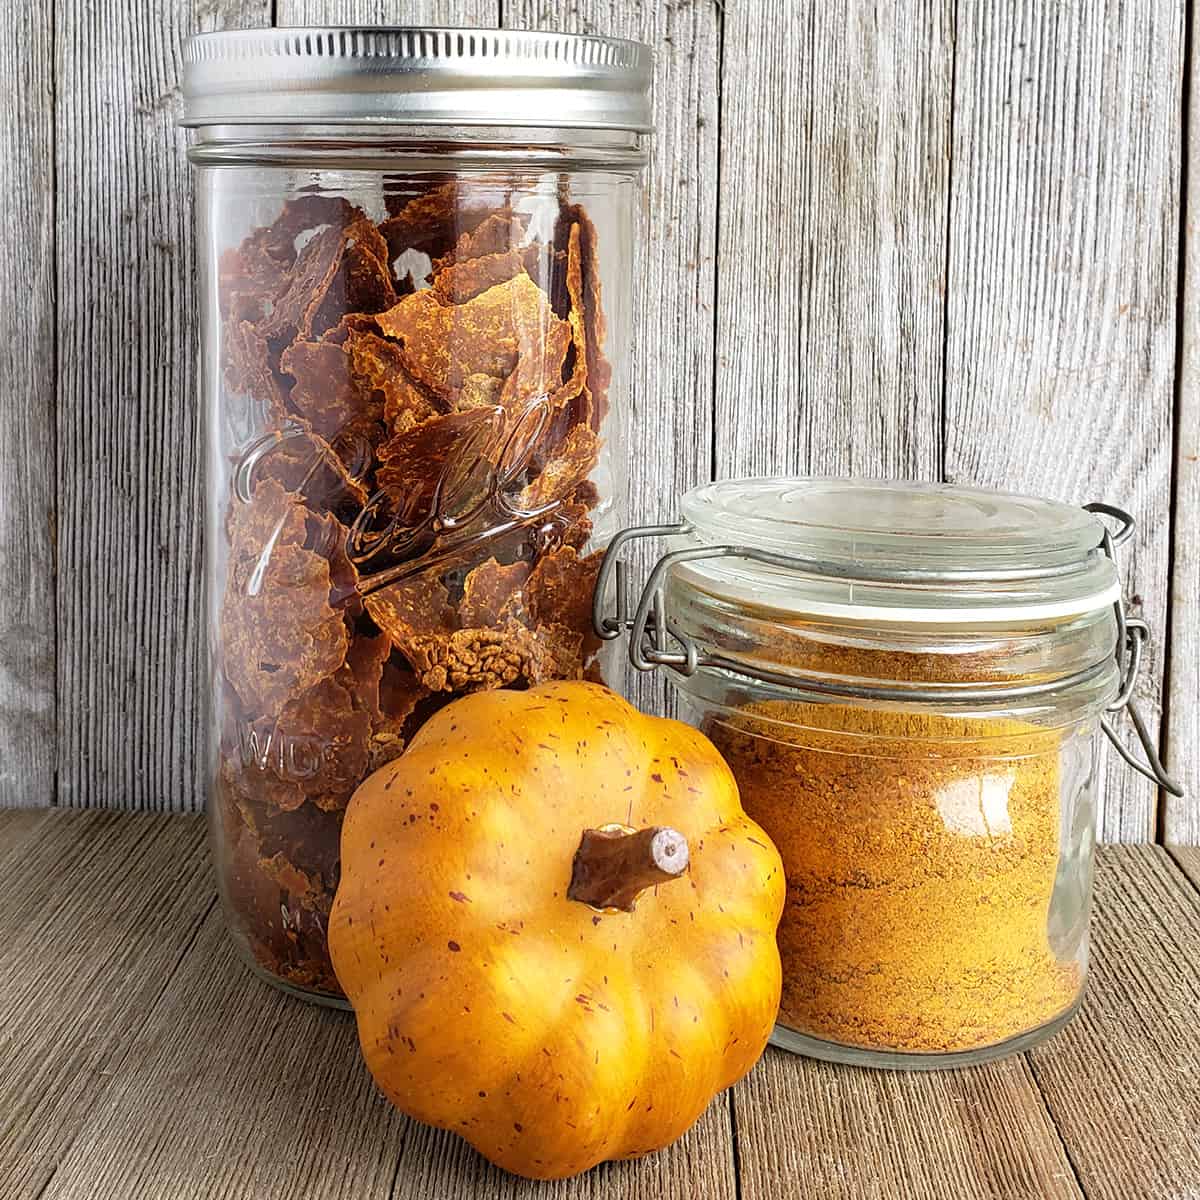 Pumpkin leather and pumpkin powder in jars with a decorative pumpkin